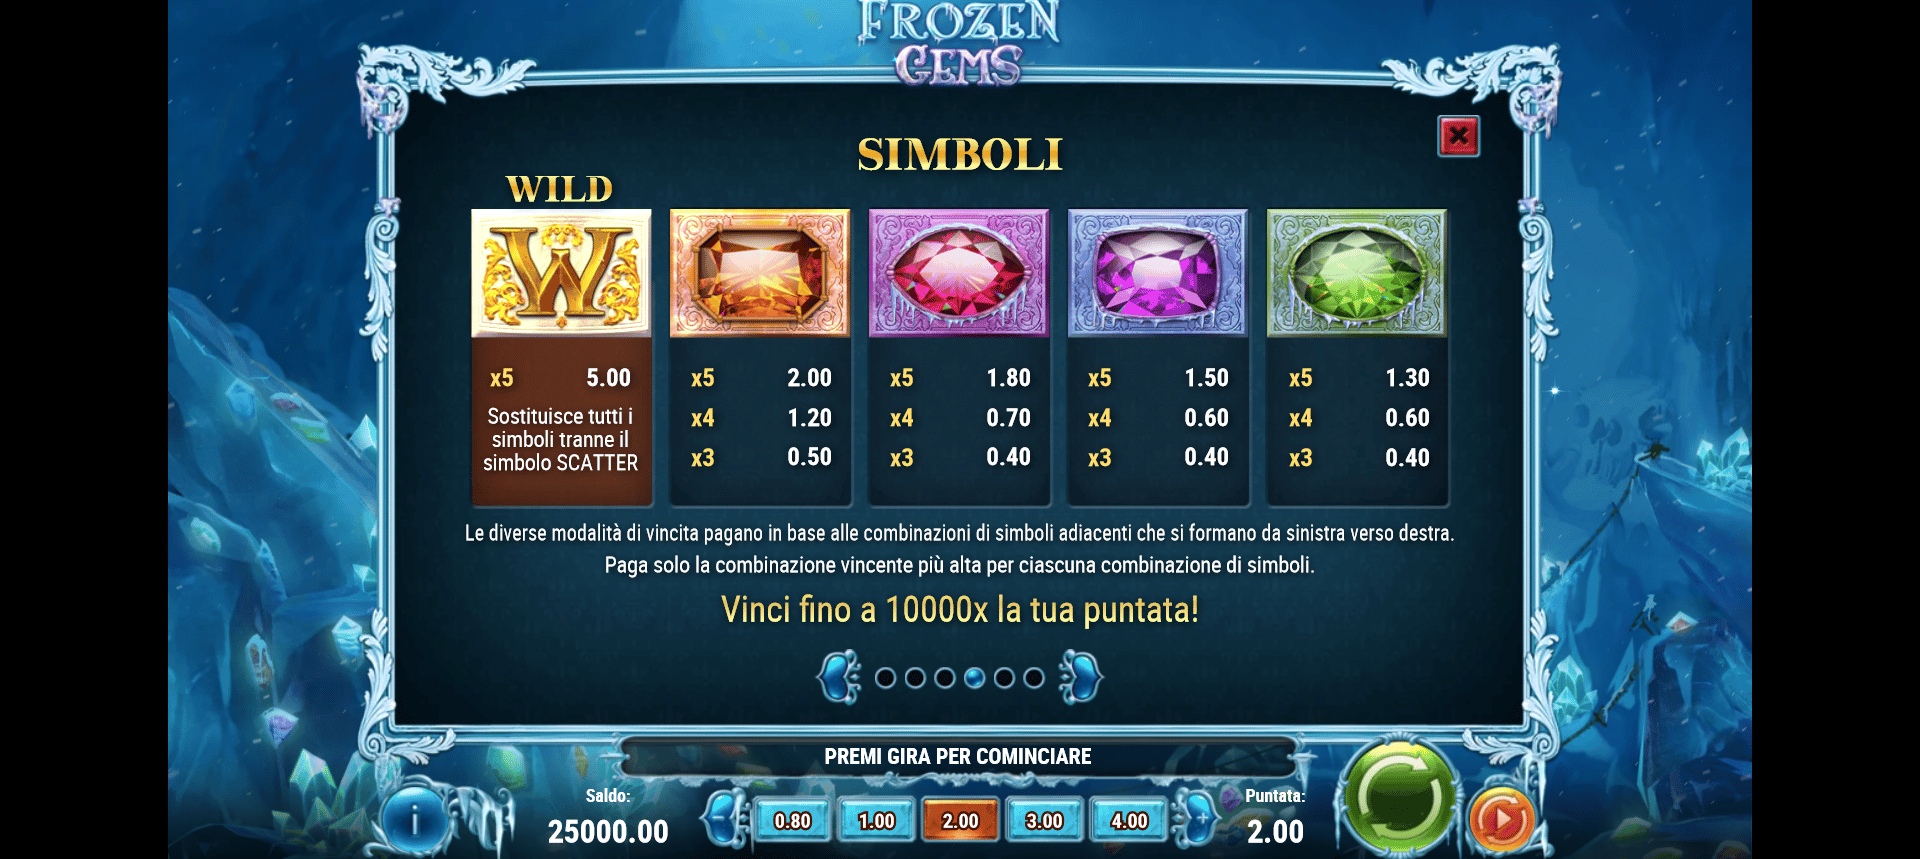 tabella delle vincite della slot online frozen gems